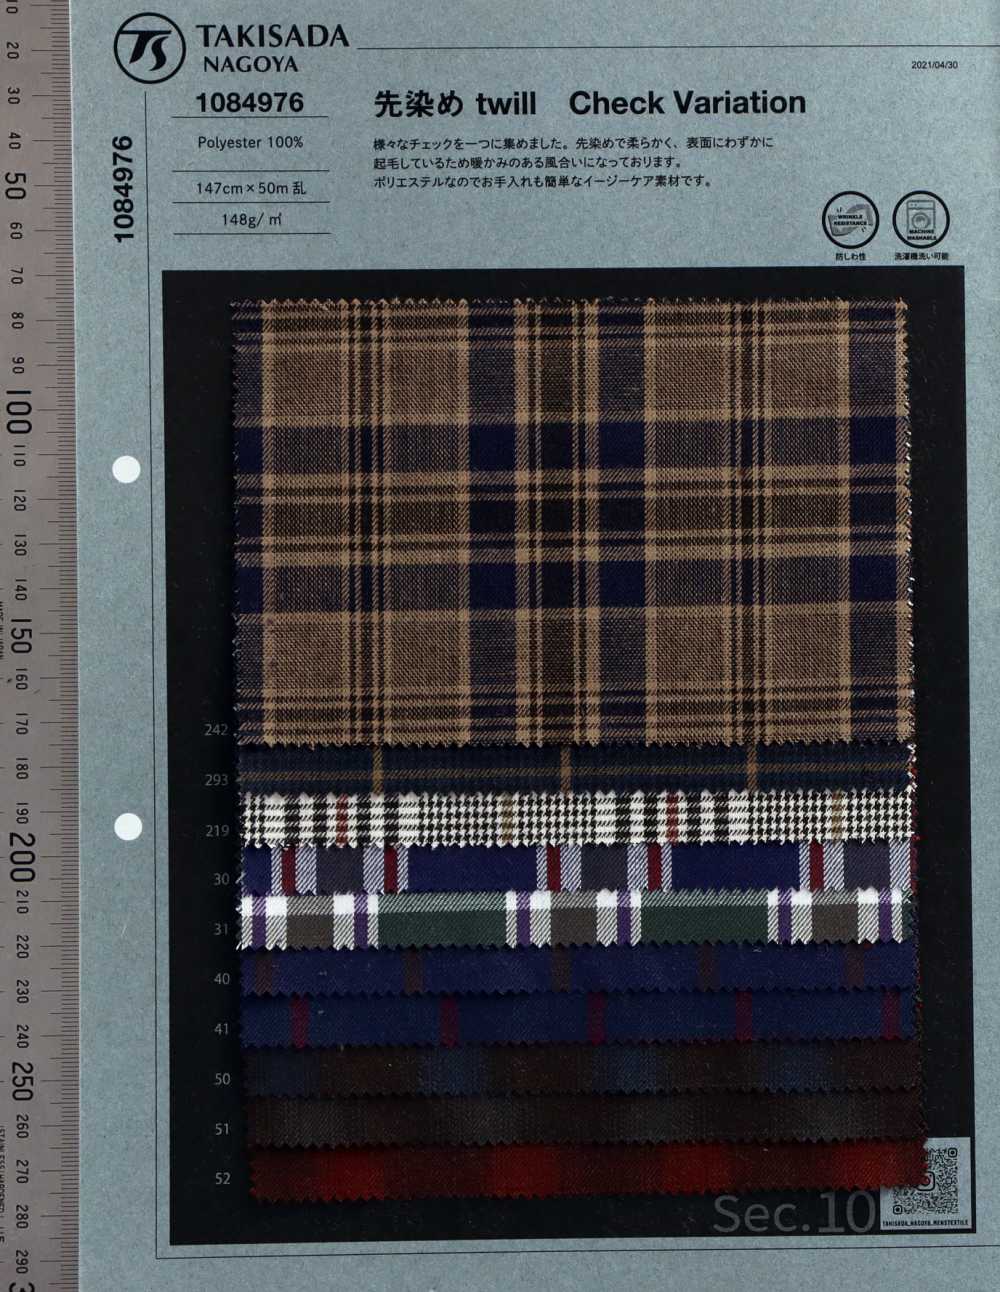 1084976 Garngefärbte Twill-Check-Variation[Textilgewebe] Takisada Nagoya